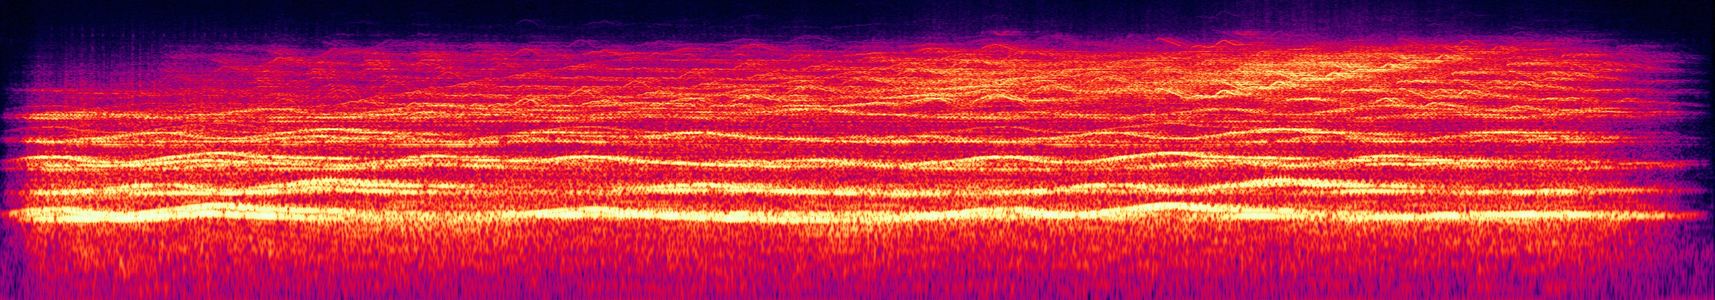 Phantoms of Darkness - Spectrogram.jpg